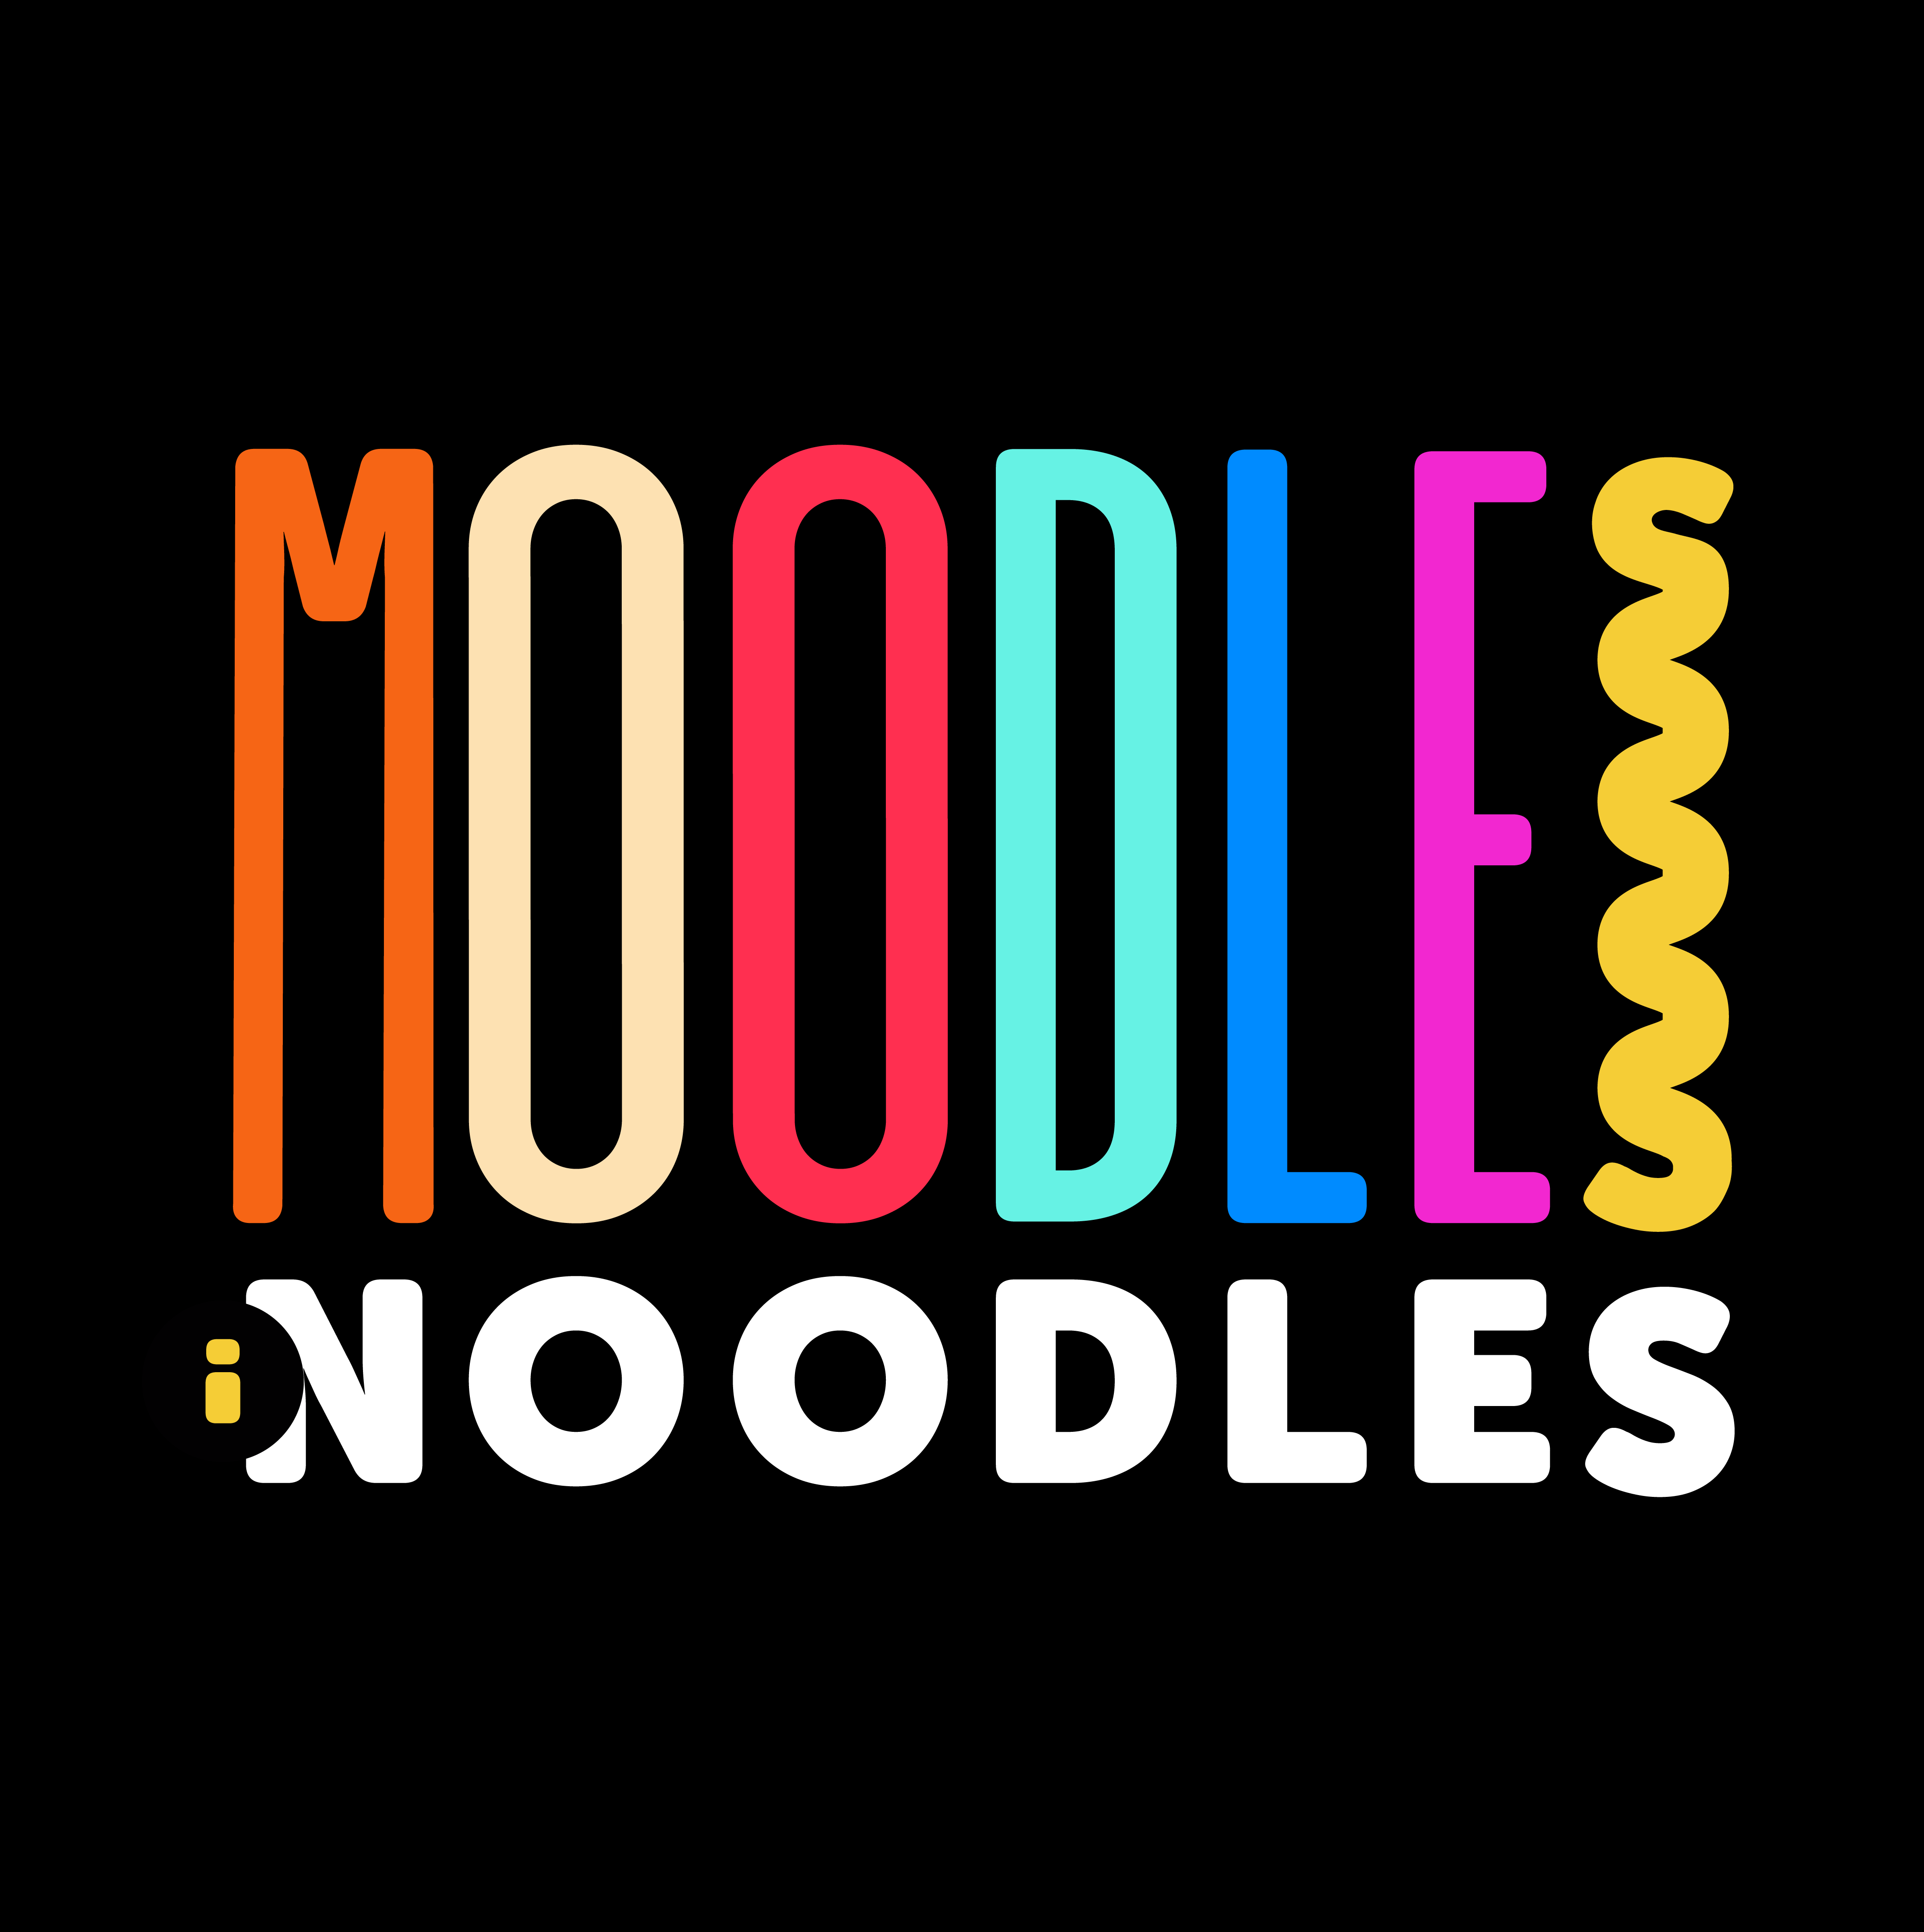 Moodles and noodles